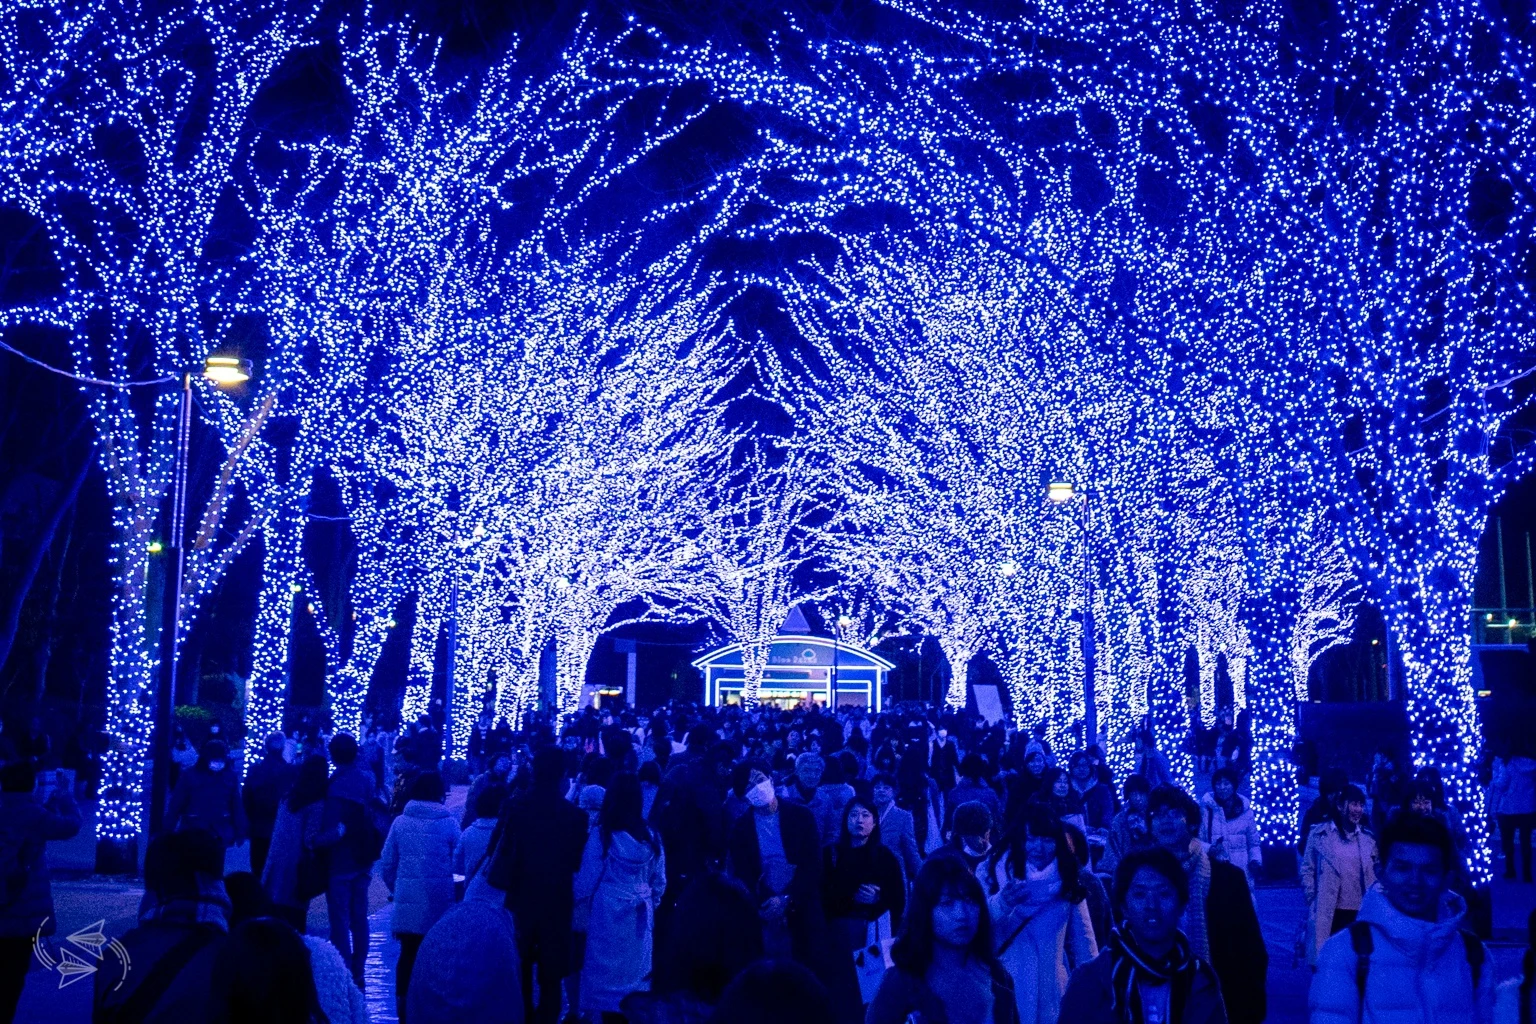 shibuya ao no dokutsu winter illuminations